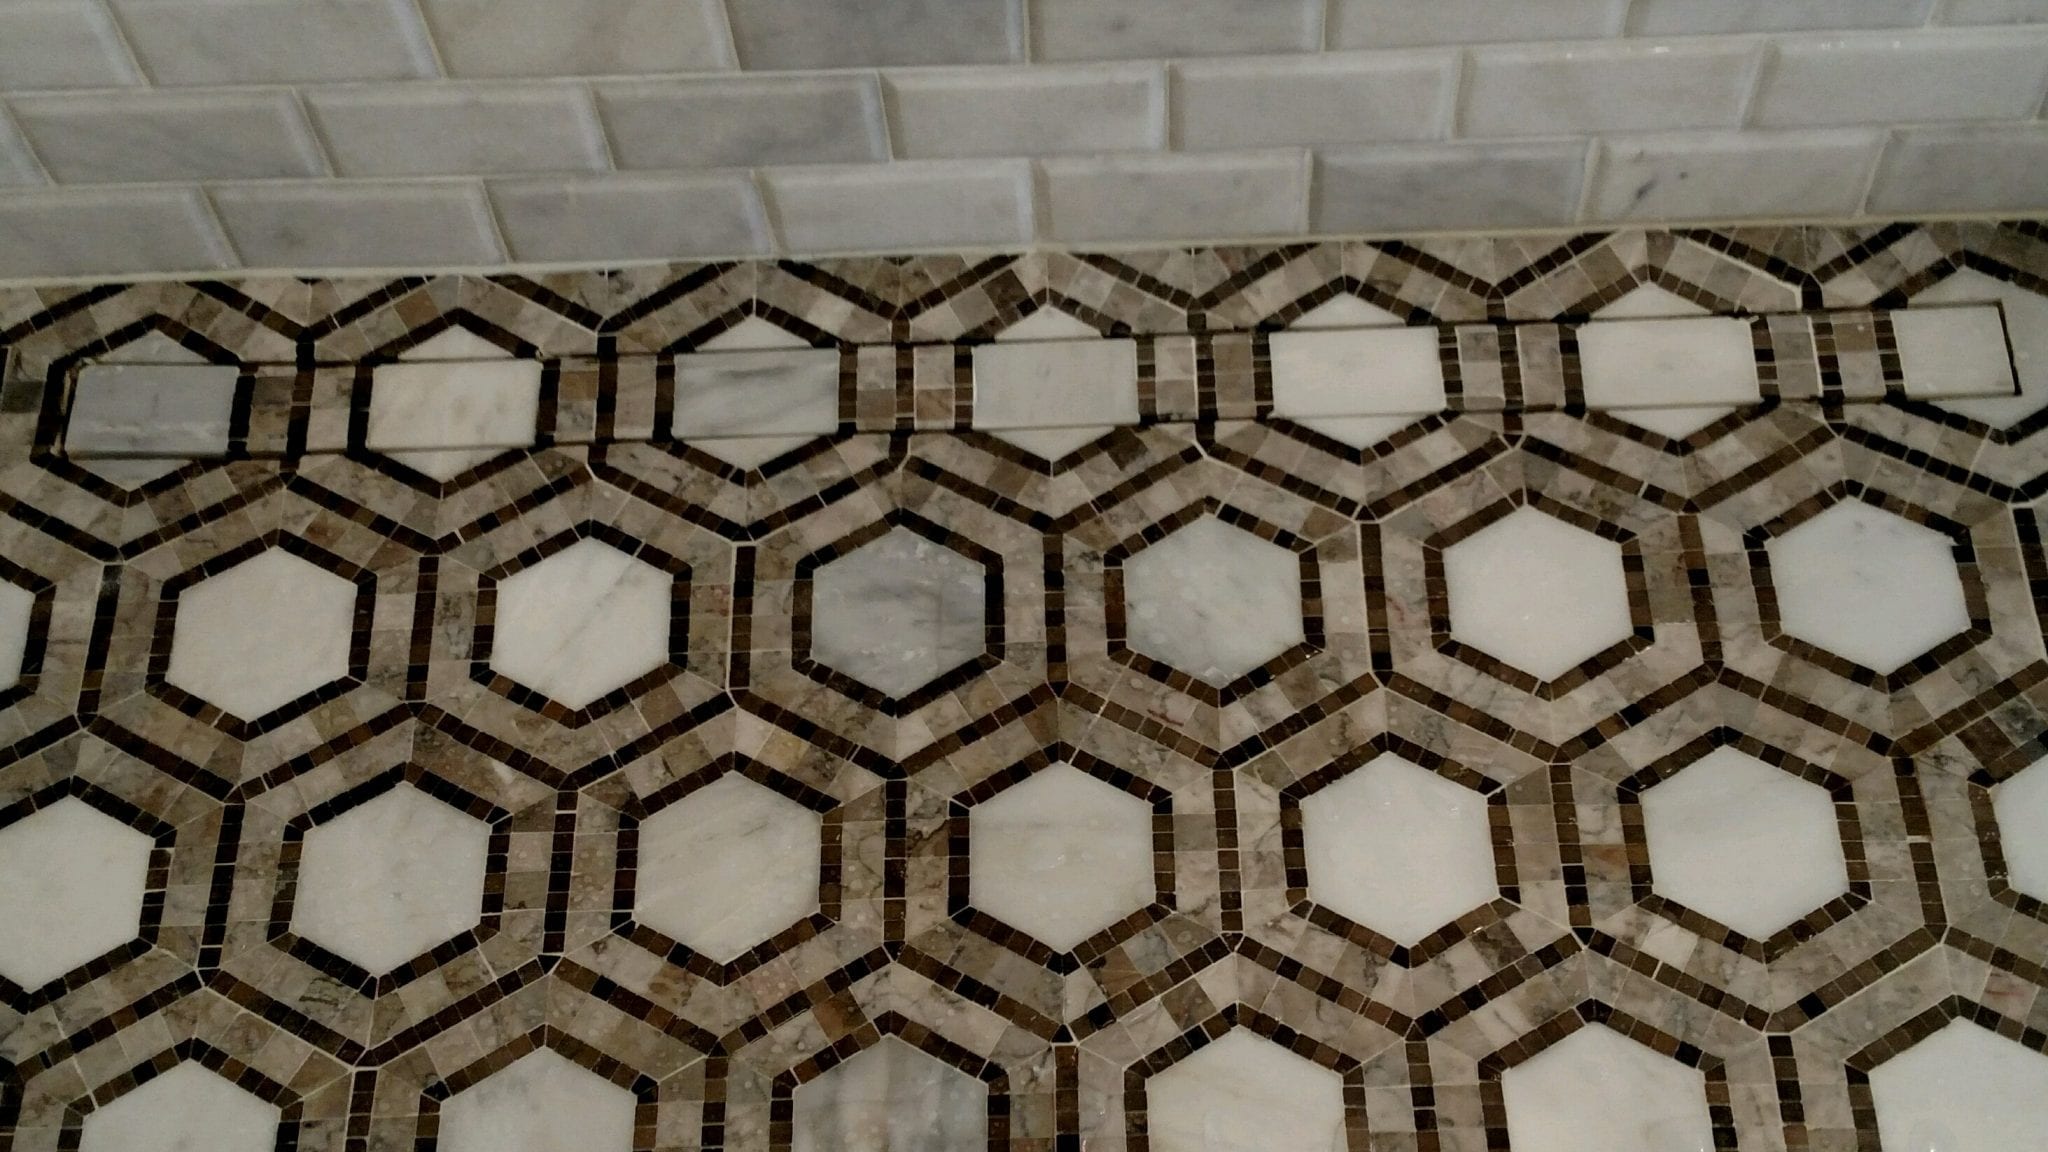 Linear shower drain hidden in the hexagonal bathroom tile flooring